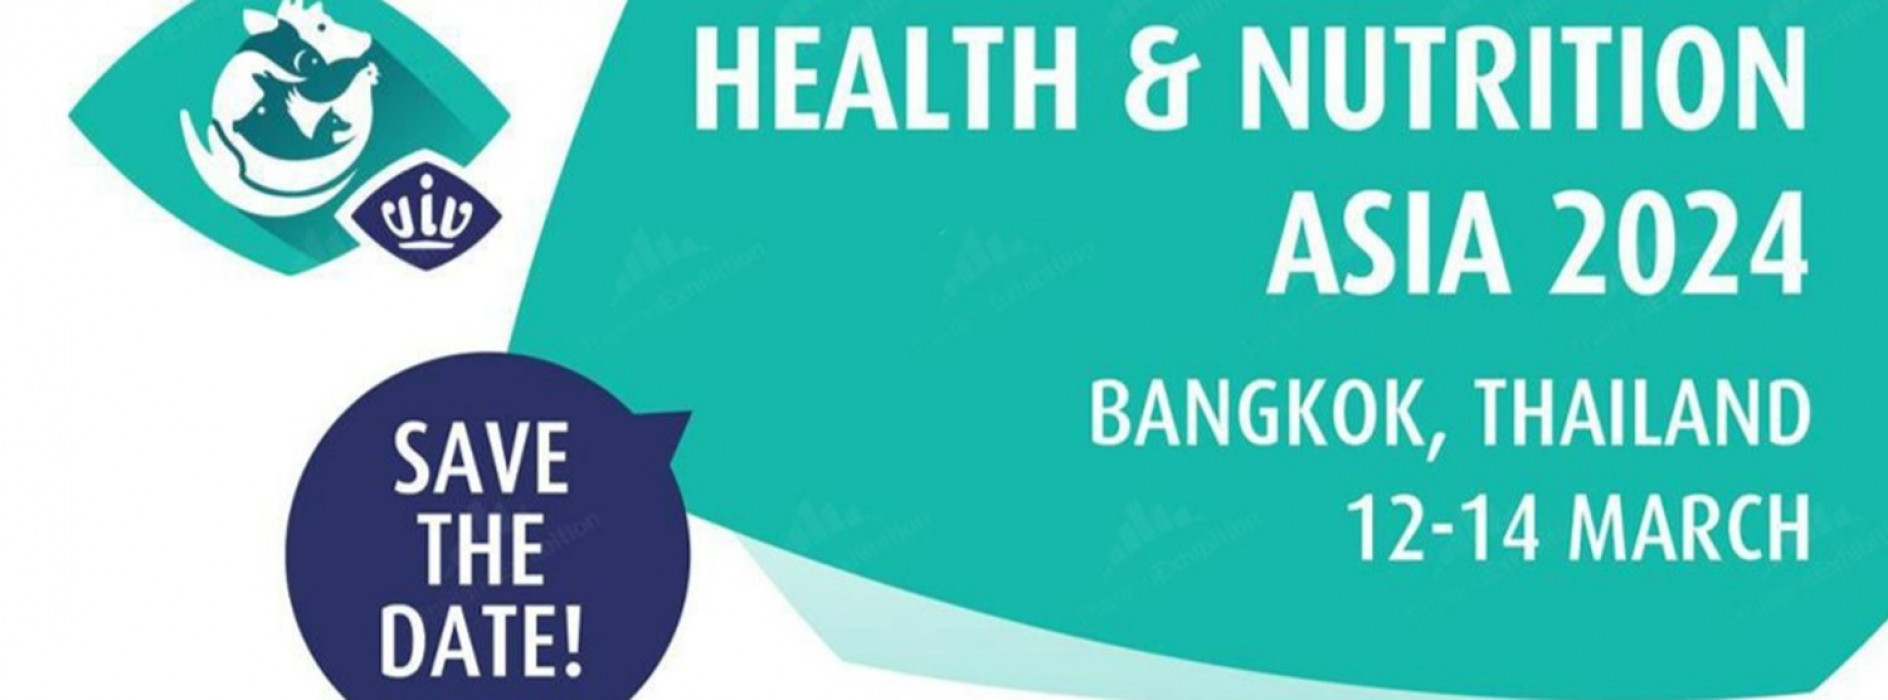 Health & Nutrition Asia 2024